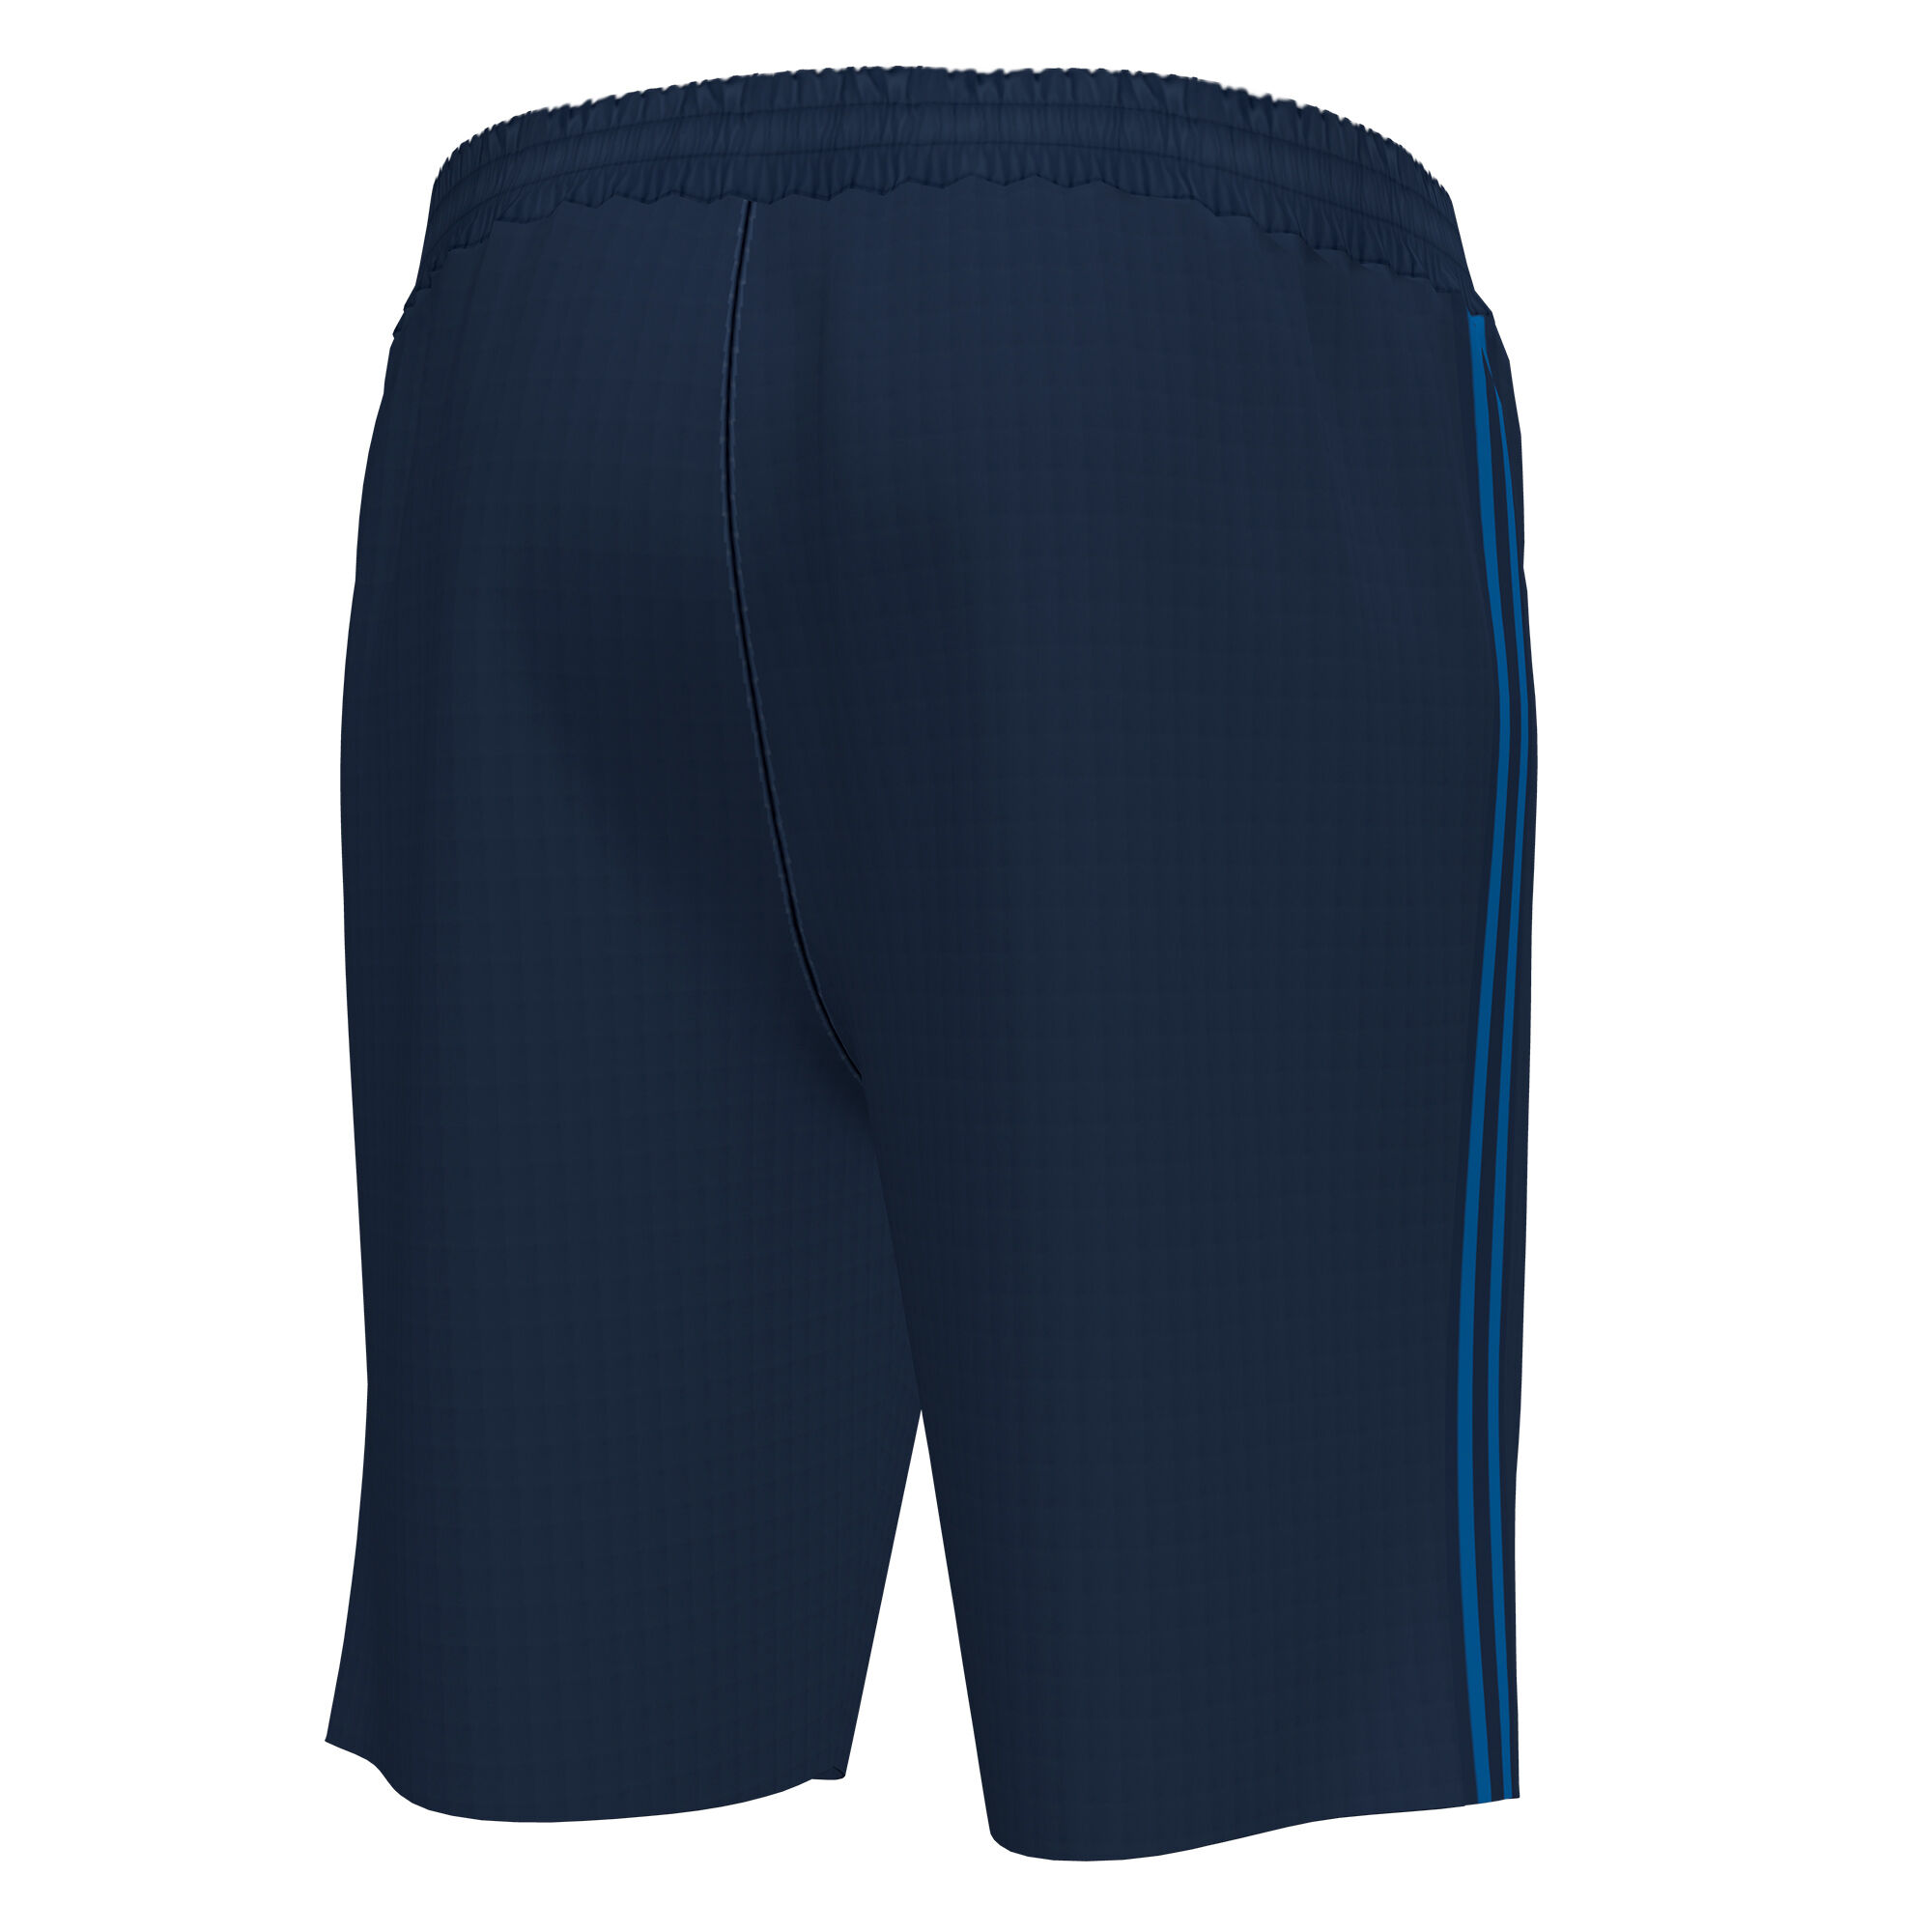 Bermuda shorts man Classic navy blue royal blue